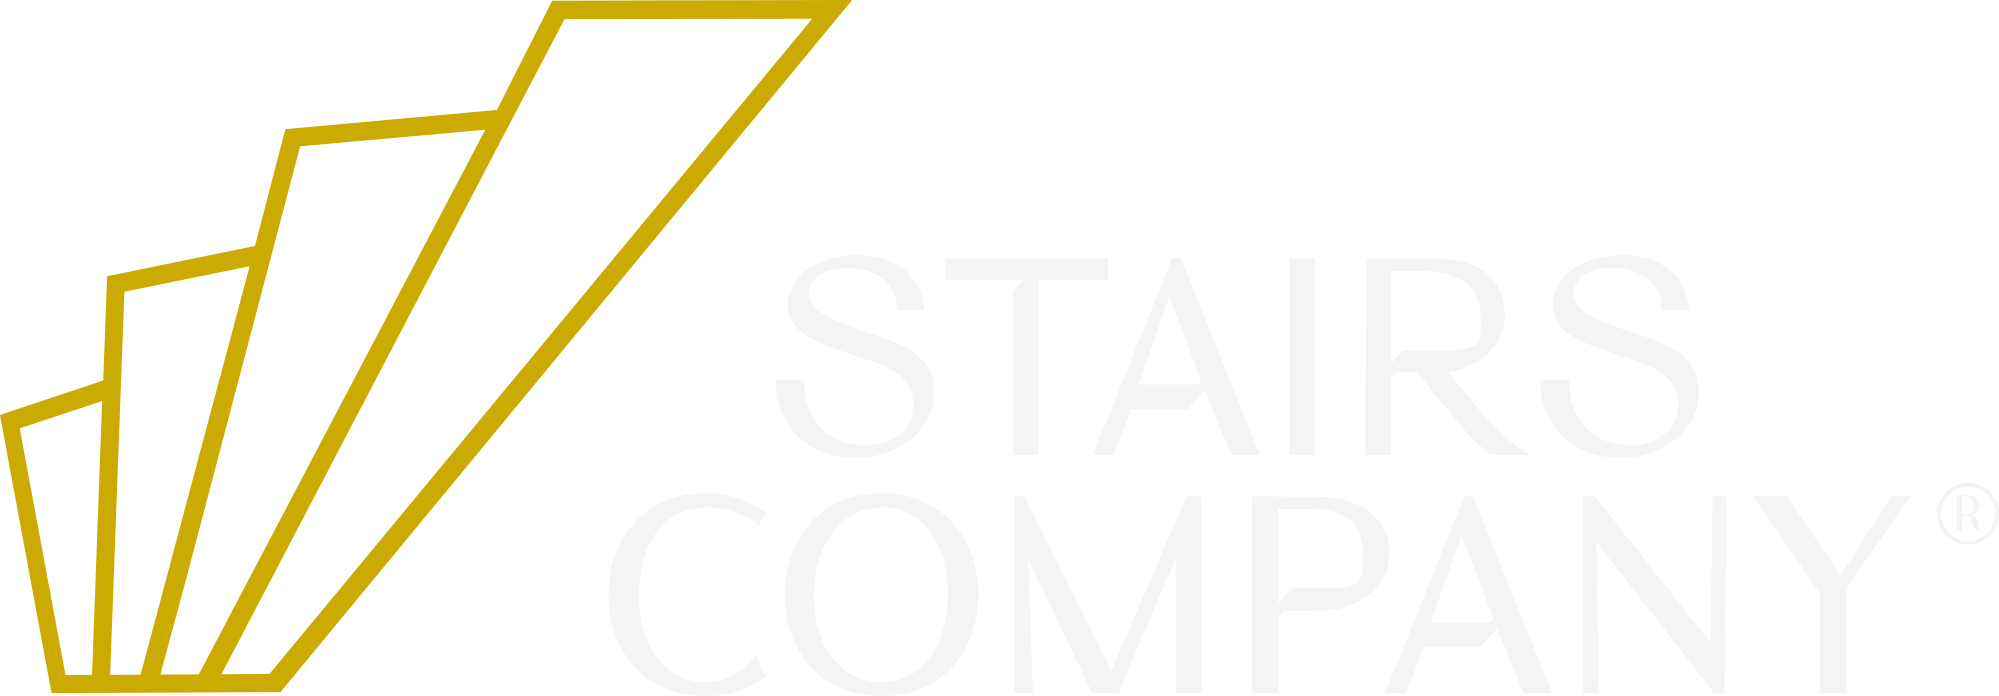 Stairscompany